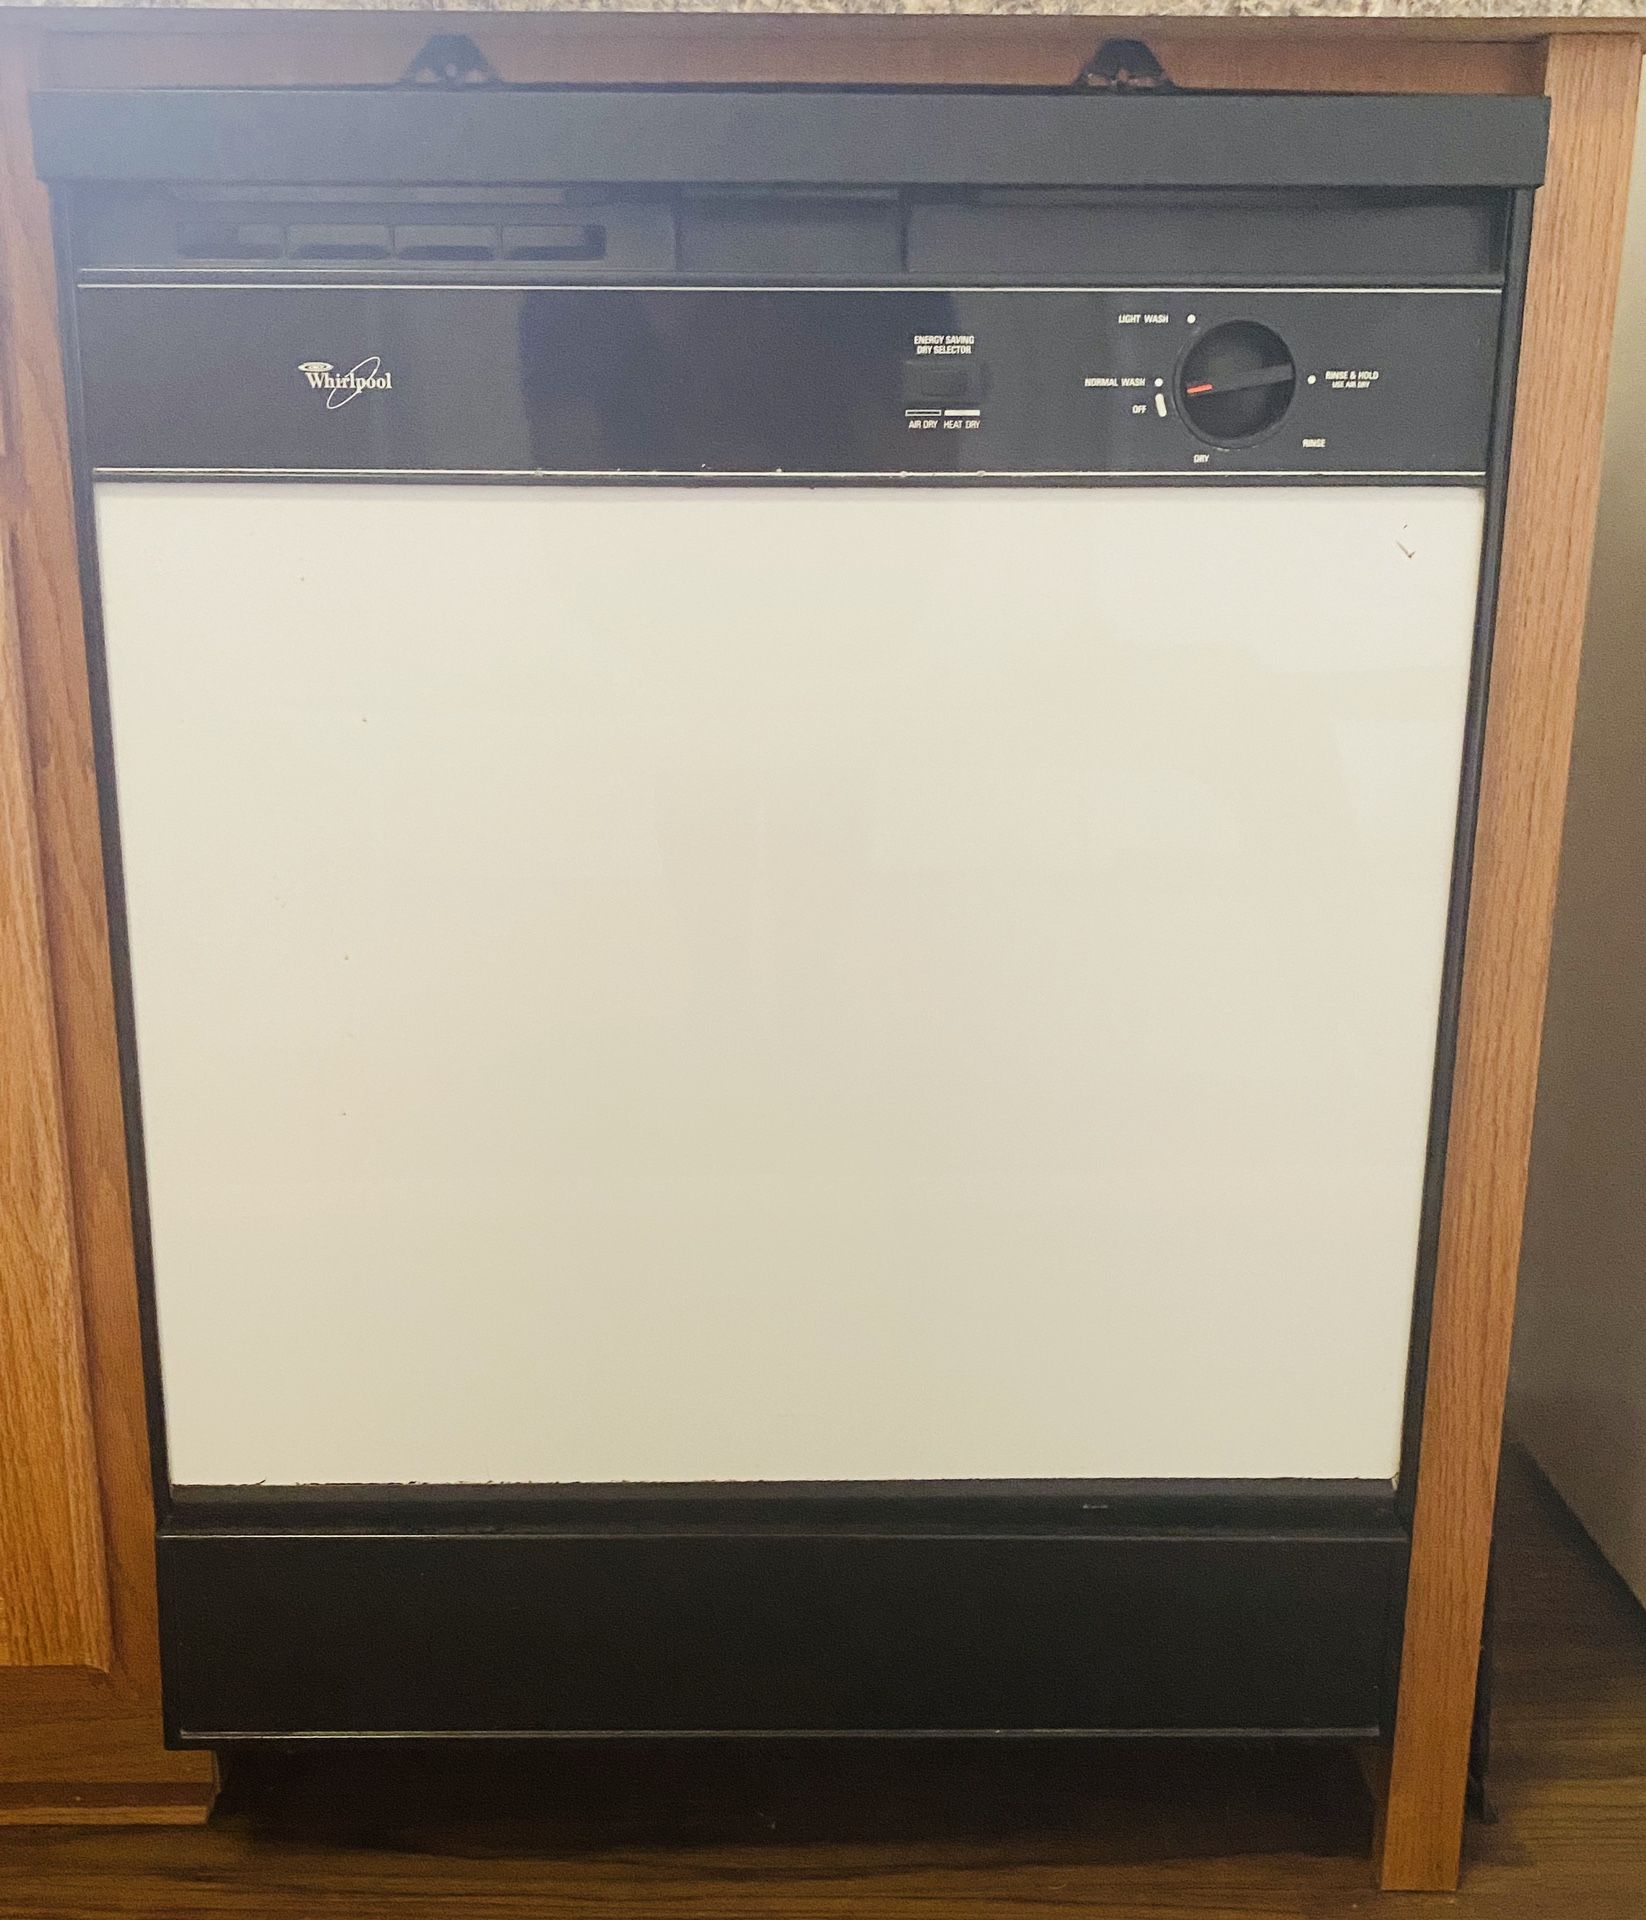 Used stove, microwave and dishwasher set